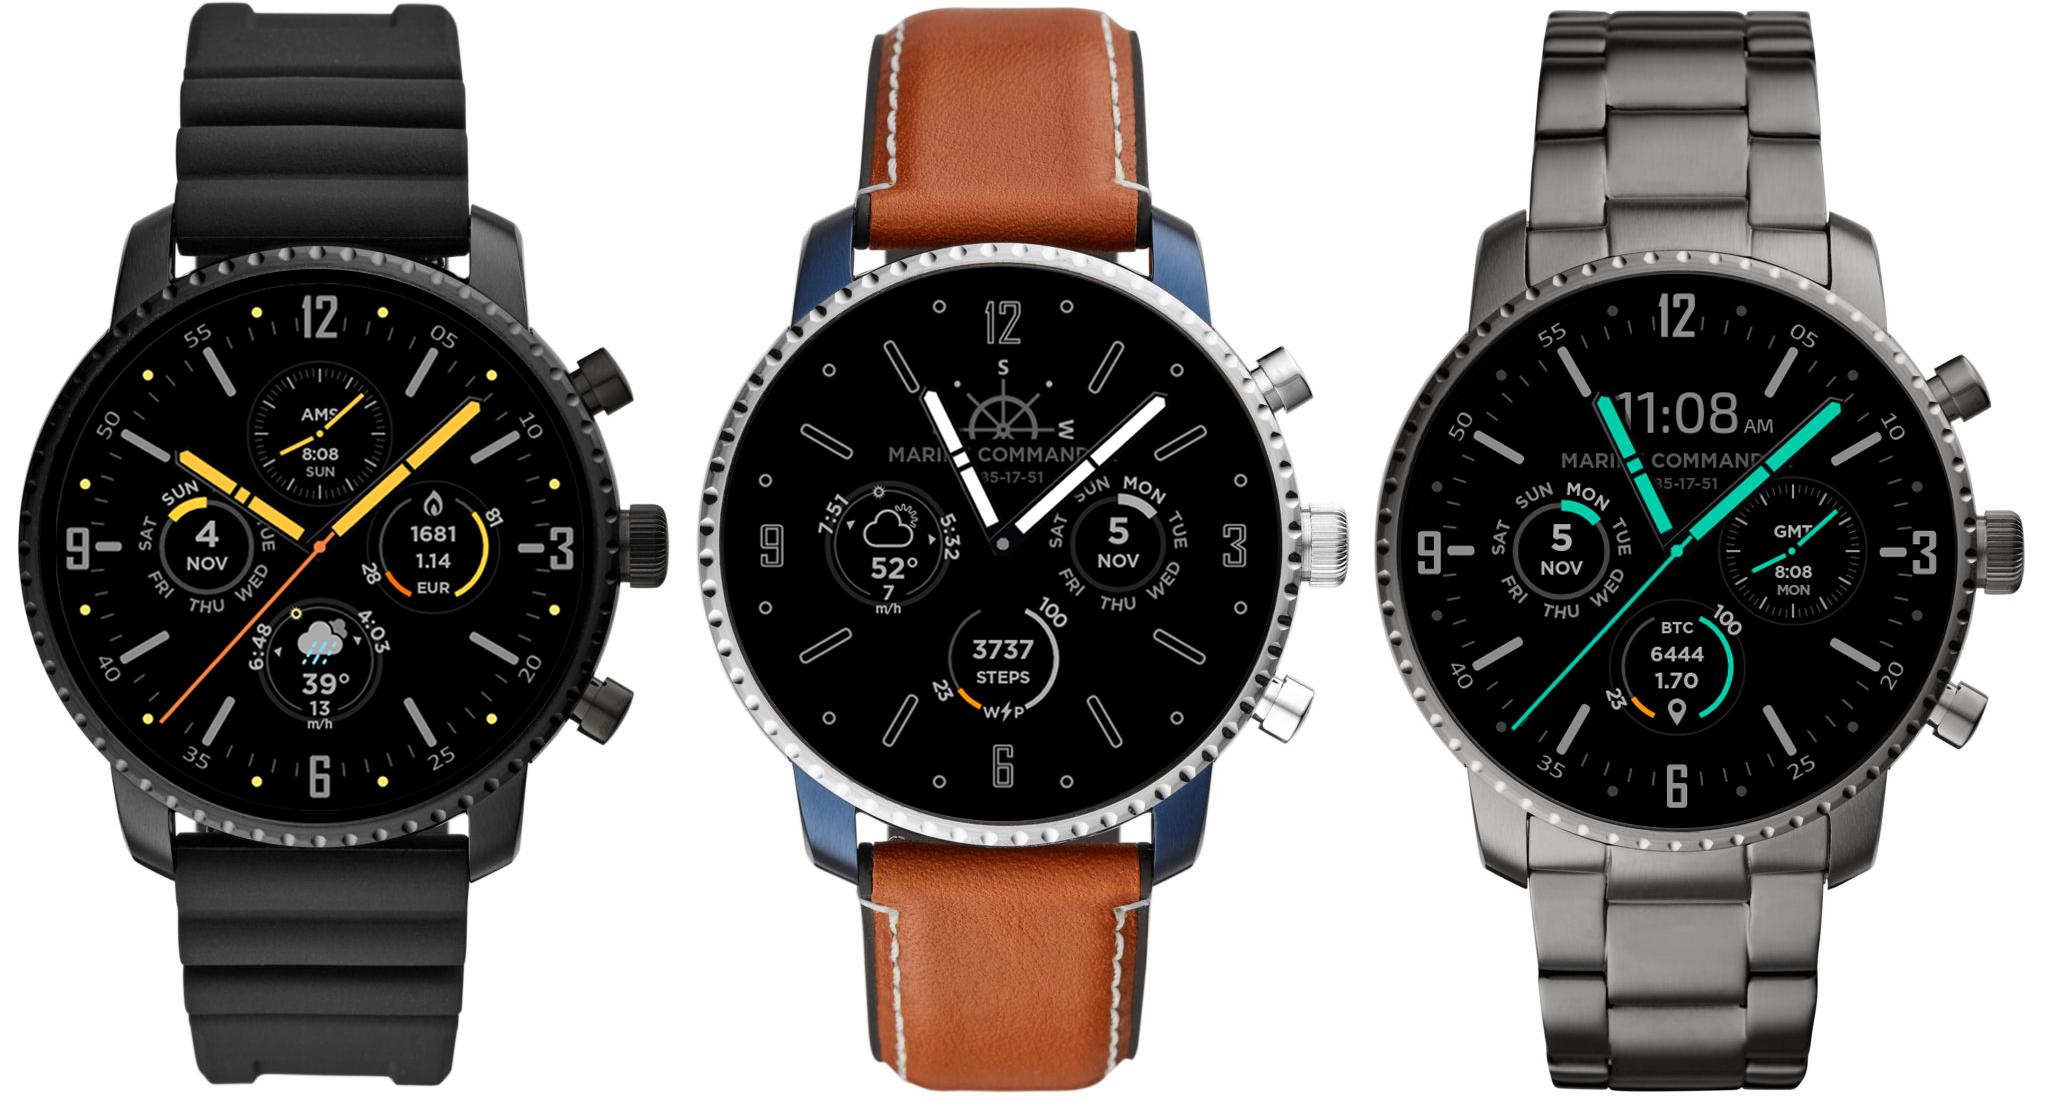 Huawei watch gt программа. Huawei gt2 watchface. Marine Commander циферблат. Huawei watch gt2 watch face.